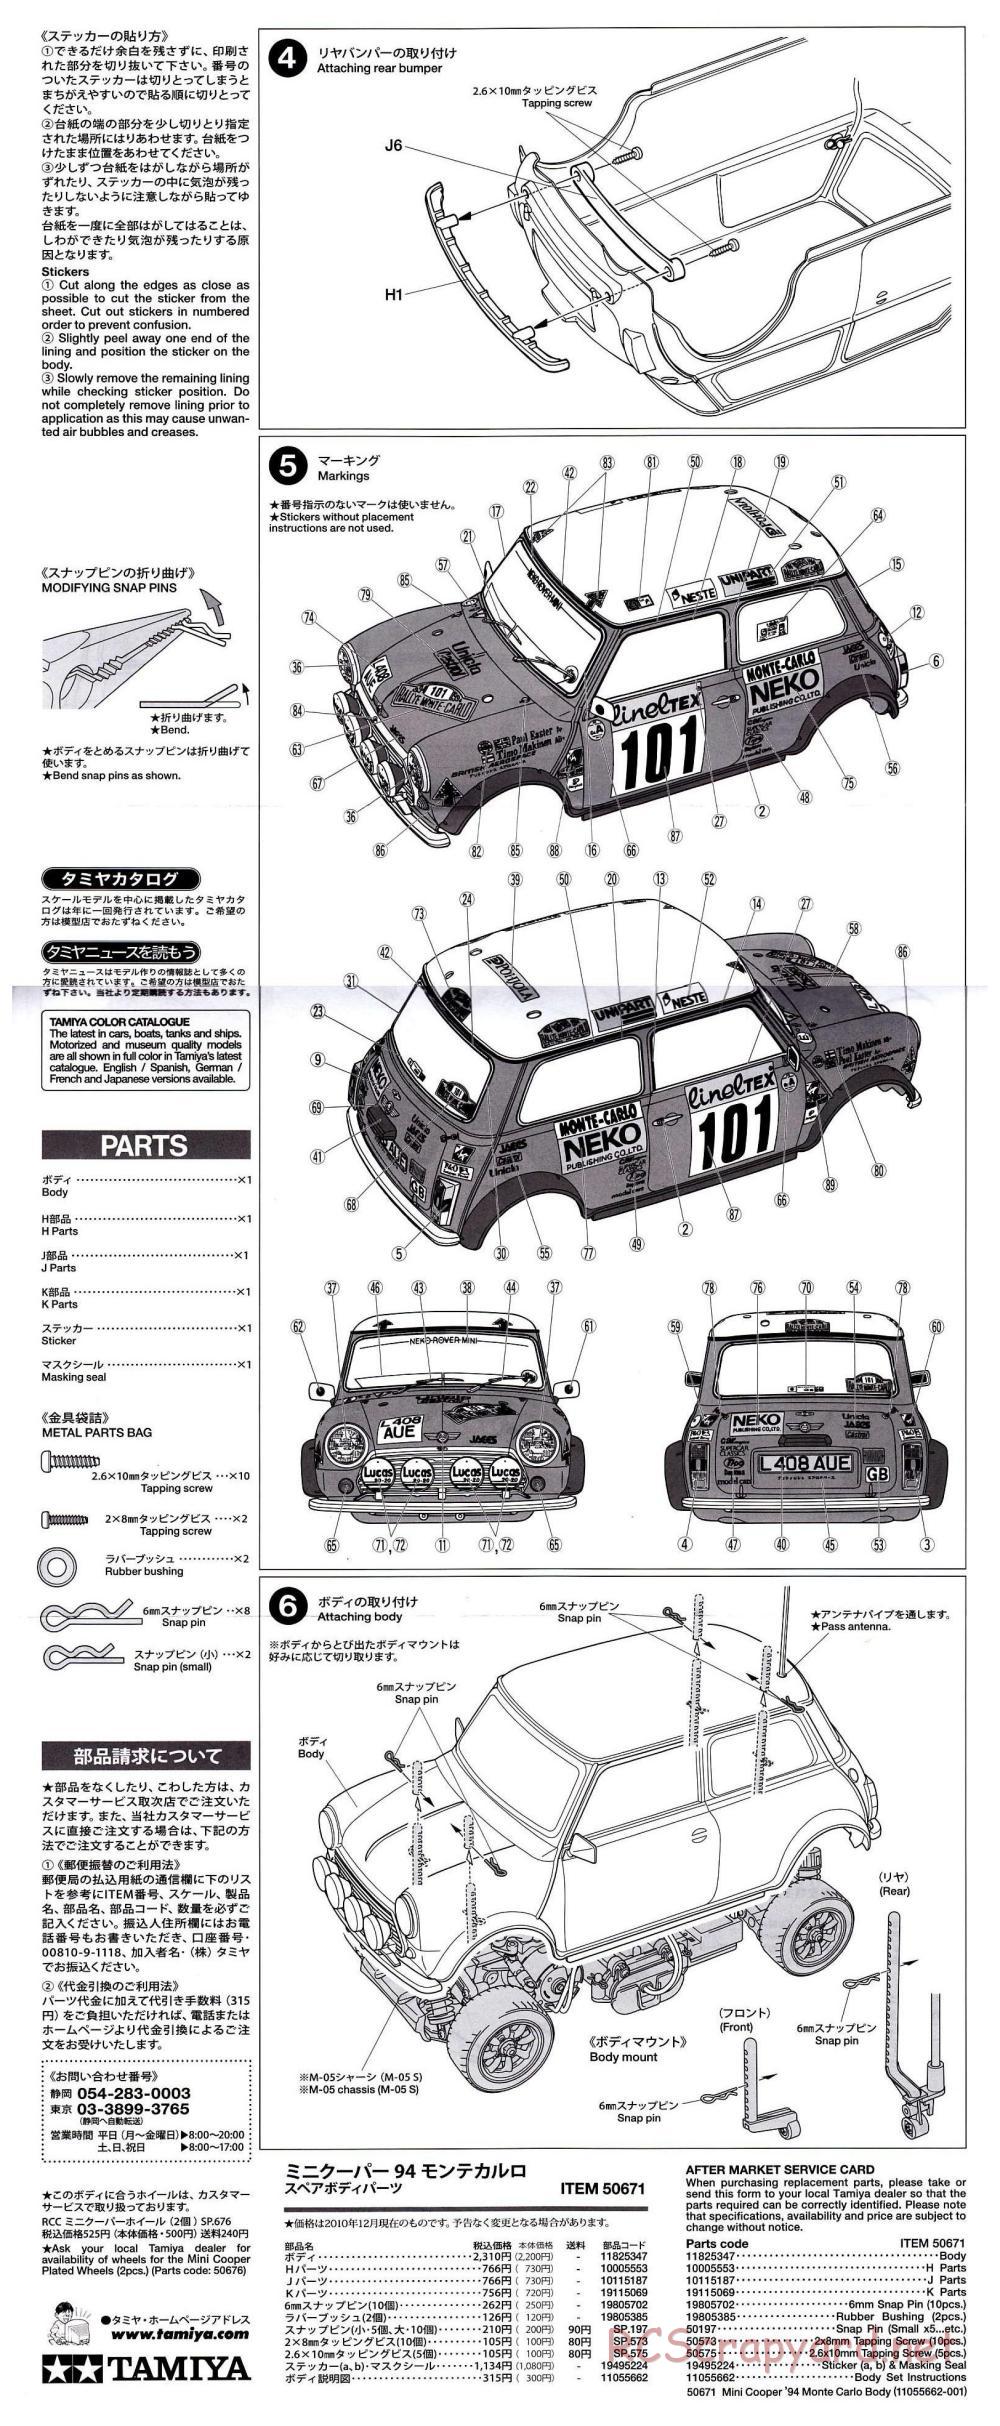 Tamiya - Mini Cooper 94 Monte-Carlo - M-05 Chassis - Body Manual - Page 2